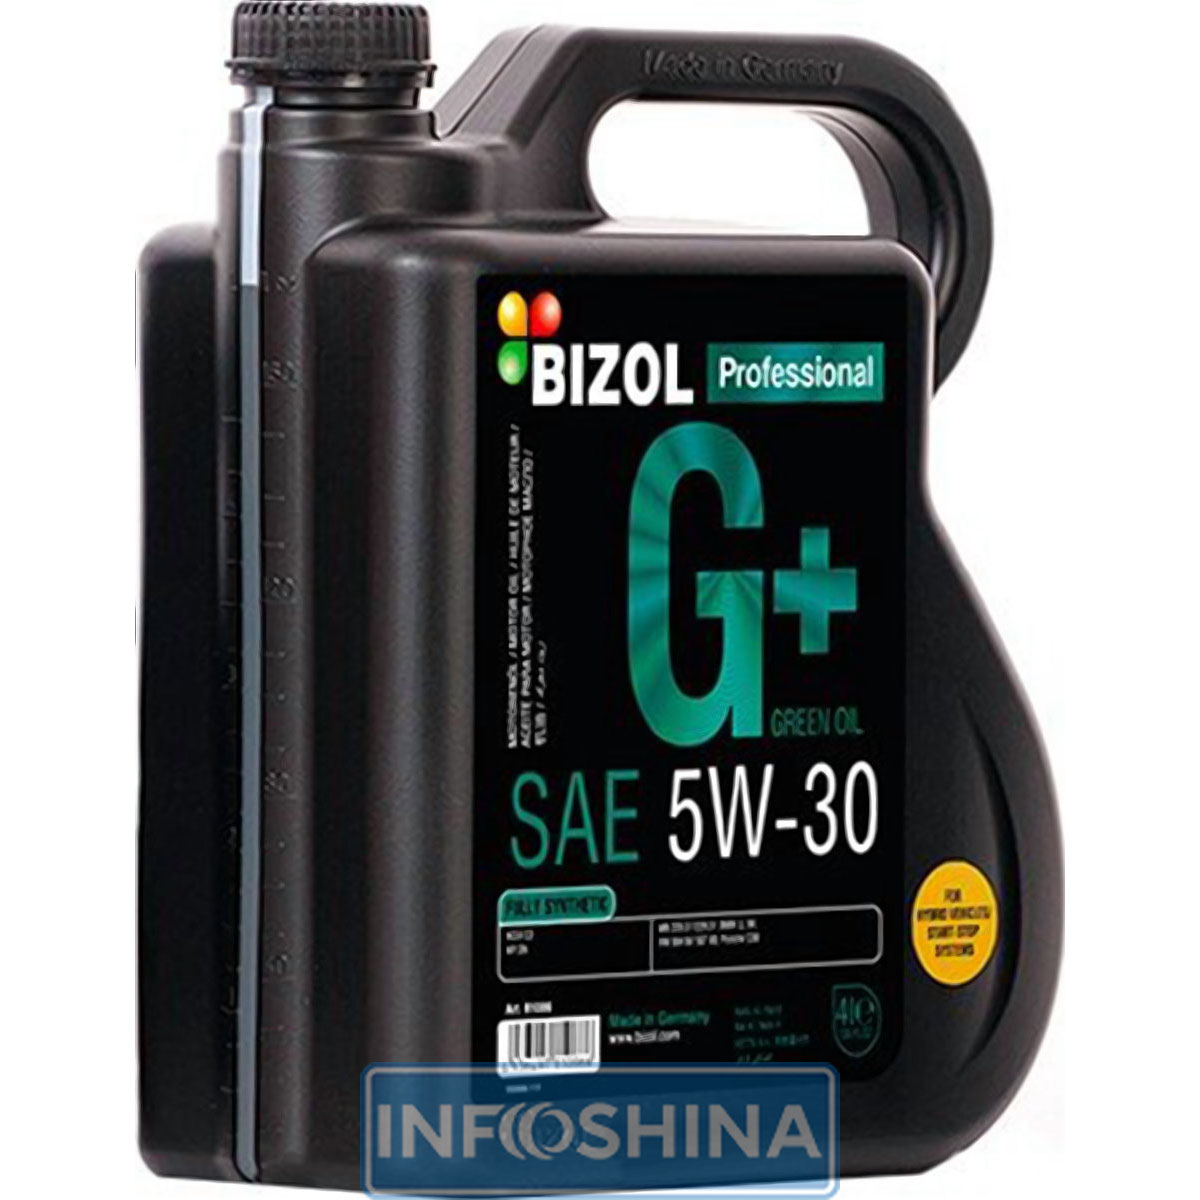 Bizol Green Oil+ 5W-30